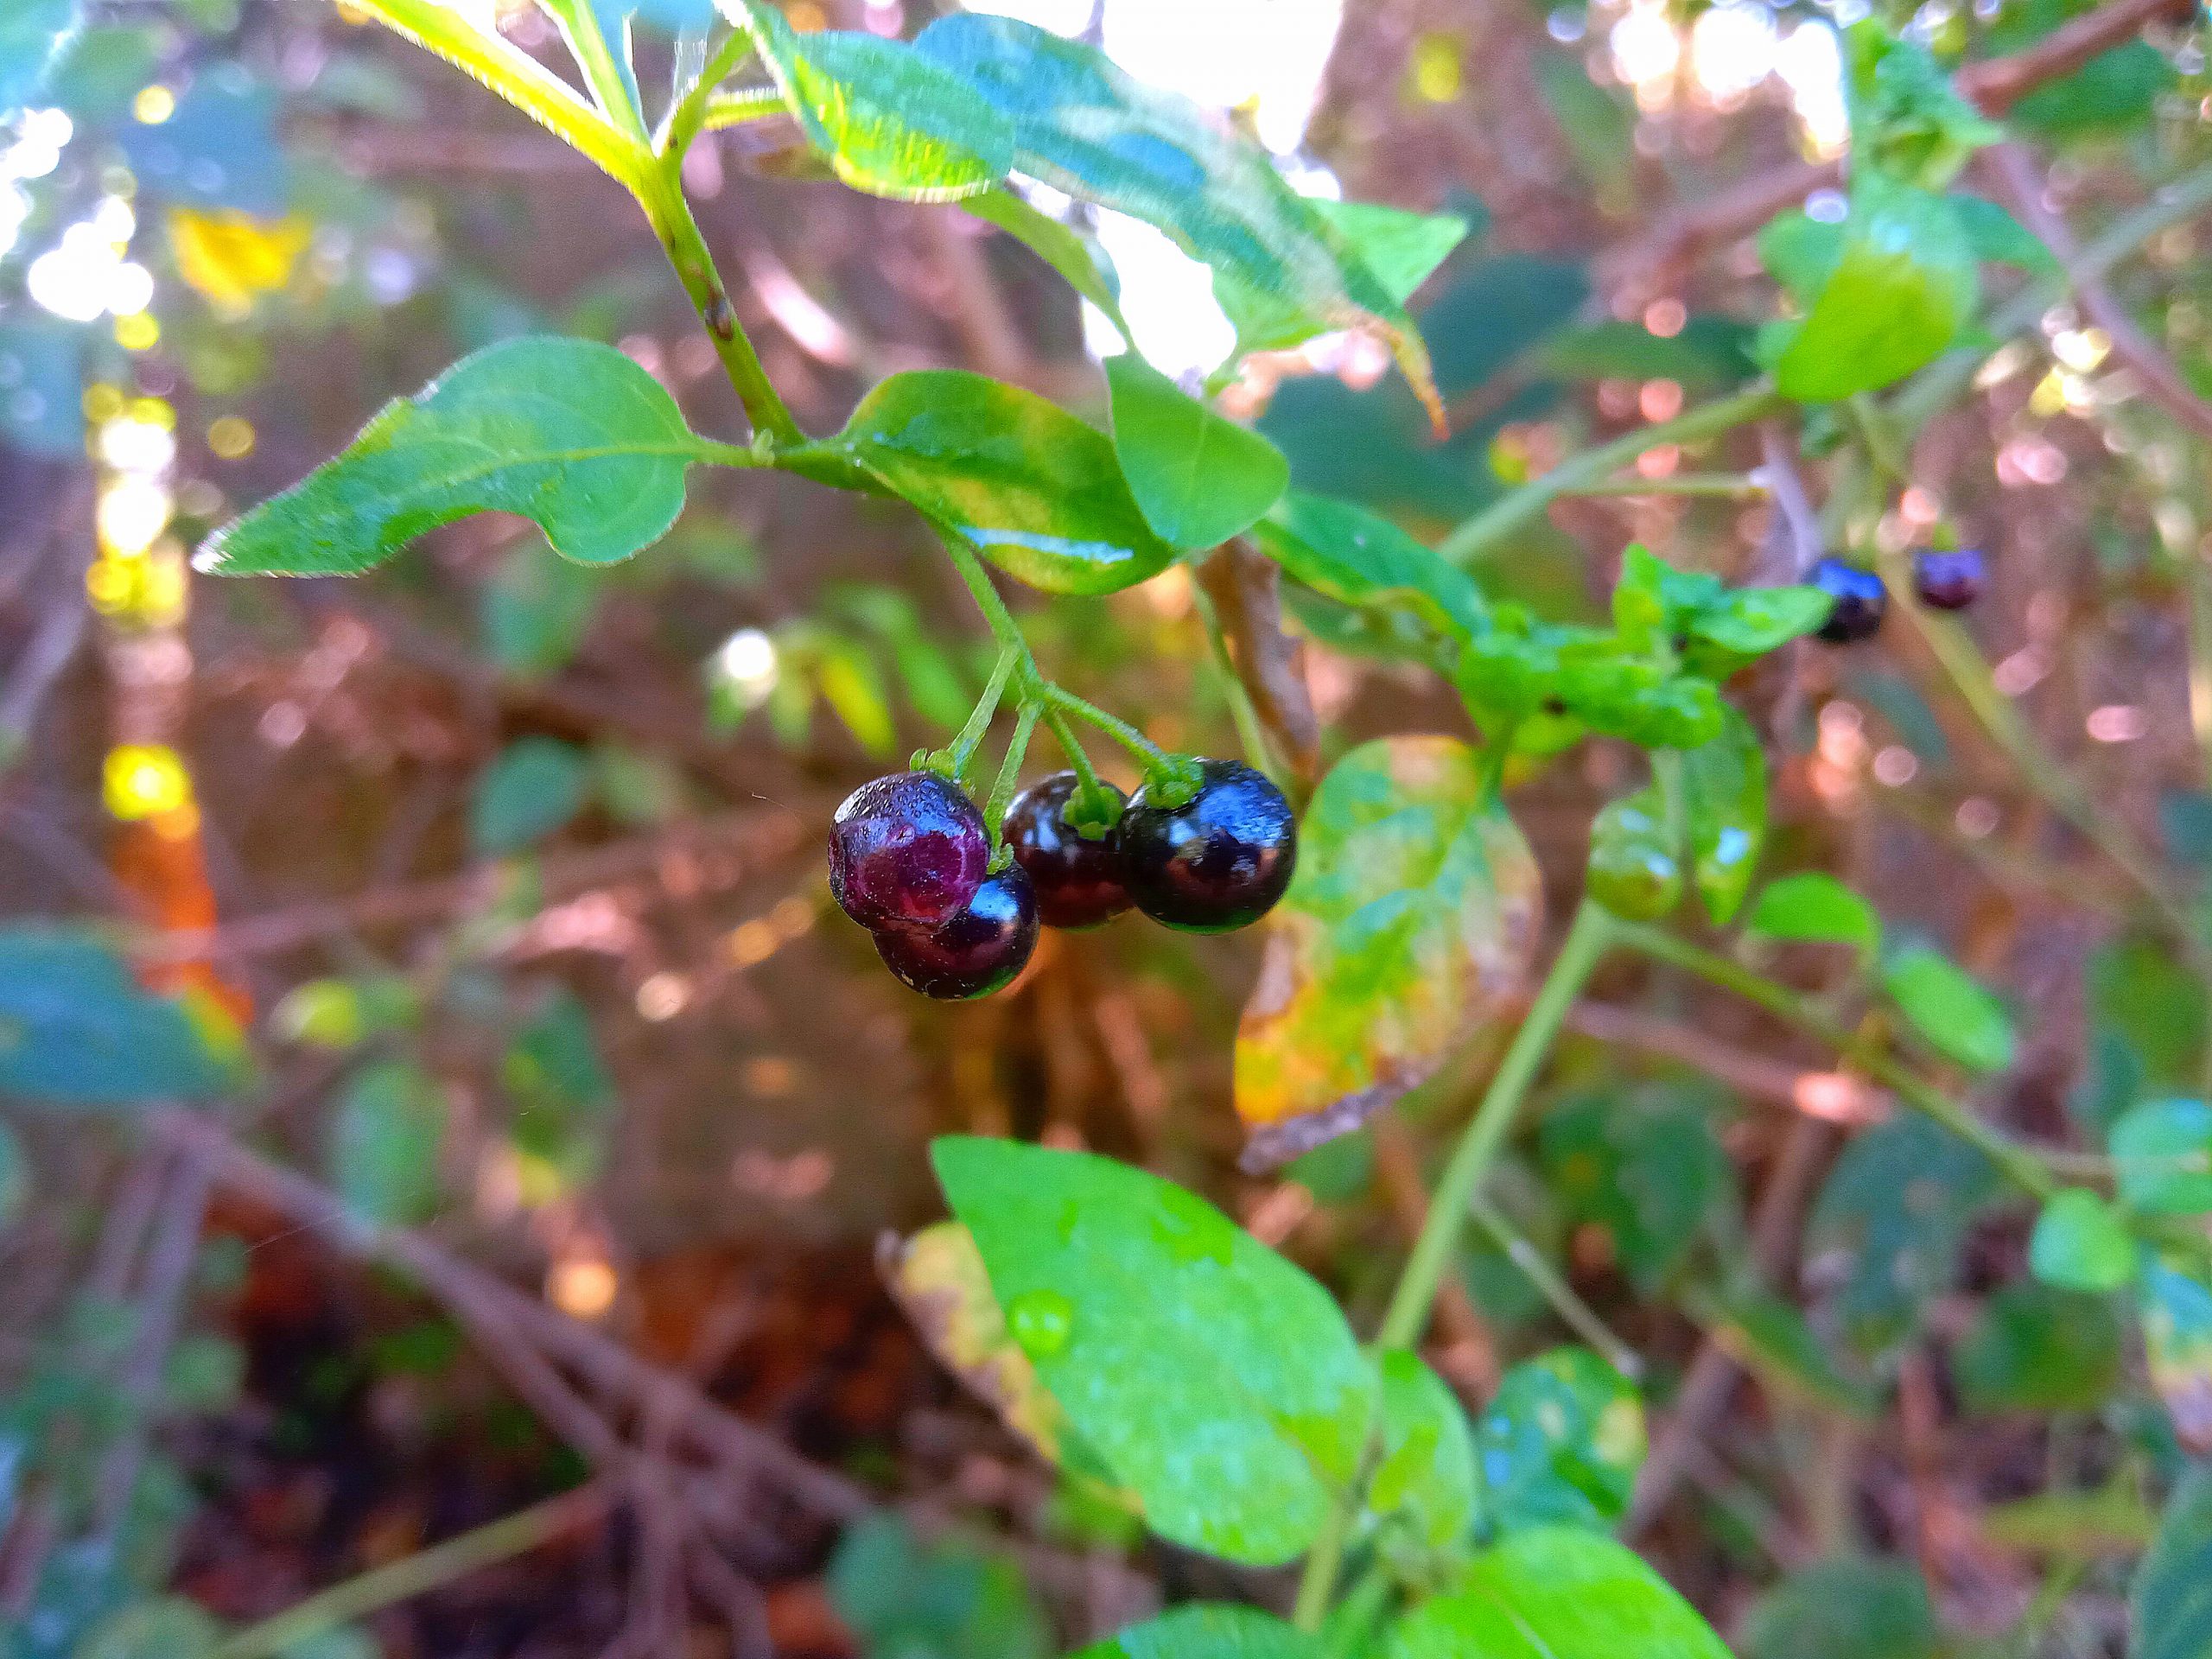 Black fruit of a plant